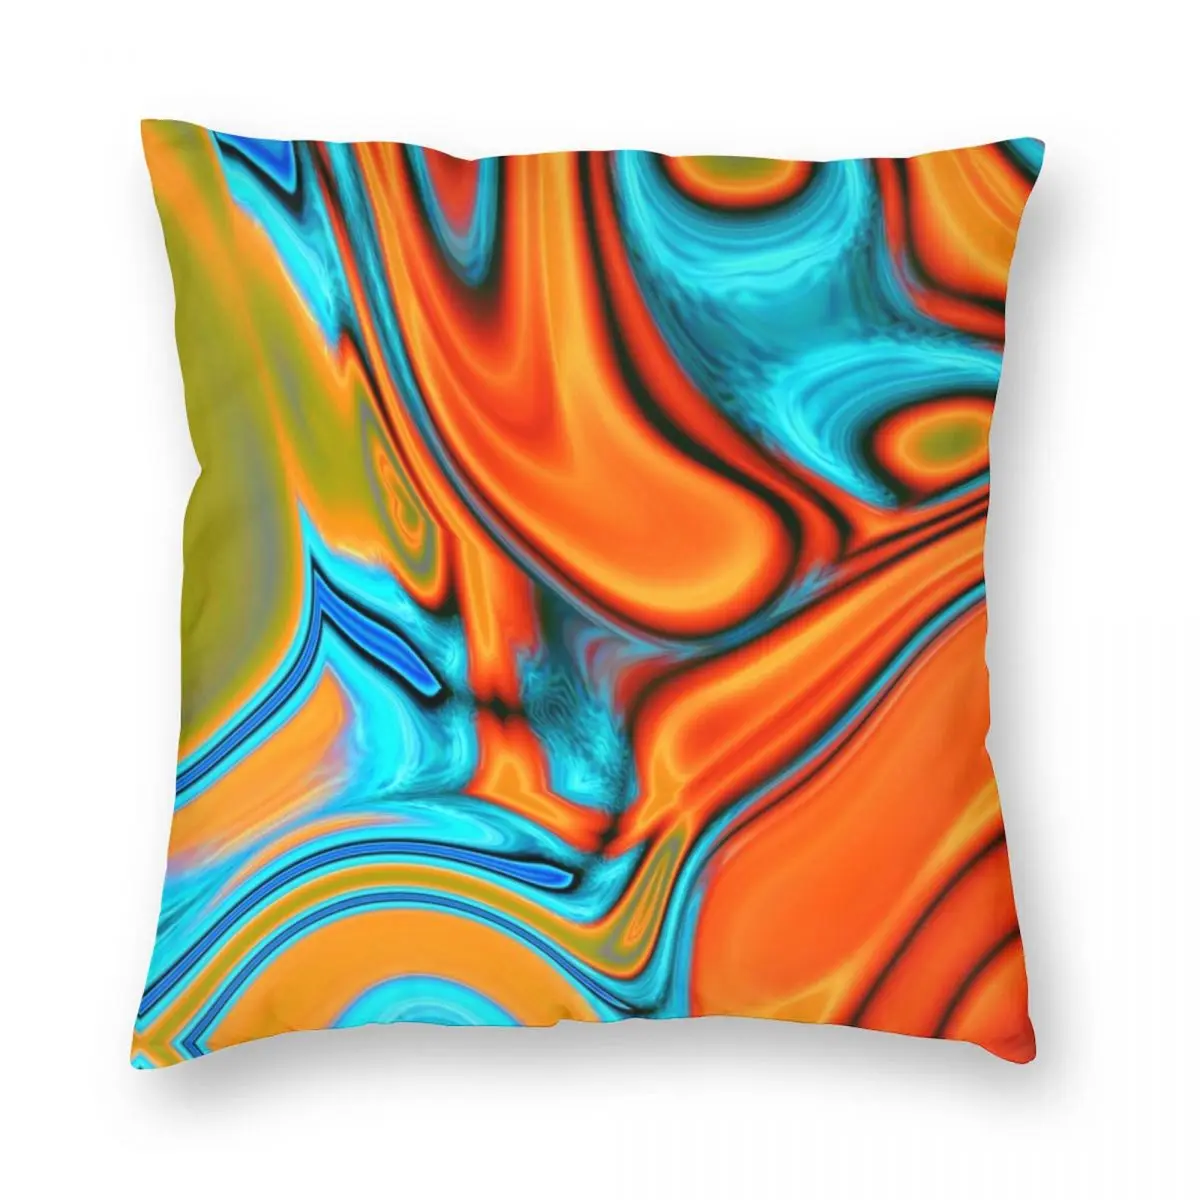 

Vivid Southwest Hipster Turquoise Orange Swirls Square Pillowcase Polyester Linen Velvet Zip Decor Throw Pillow Case Car Cushion